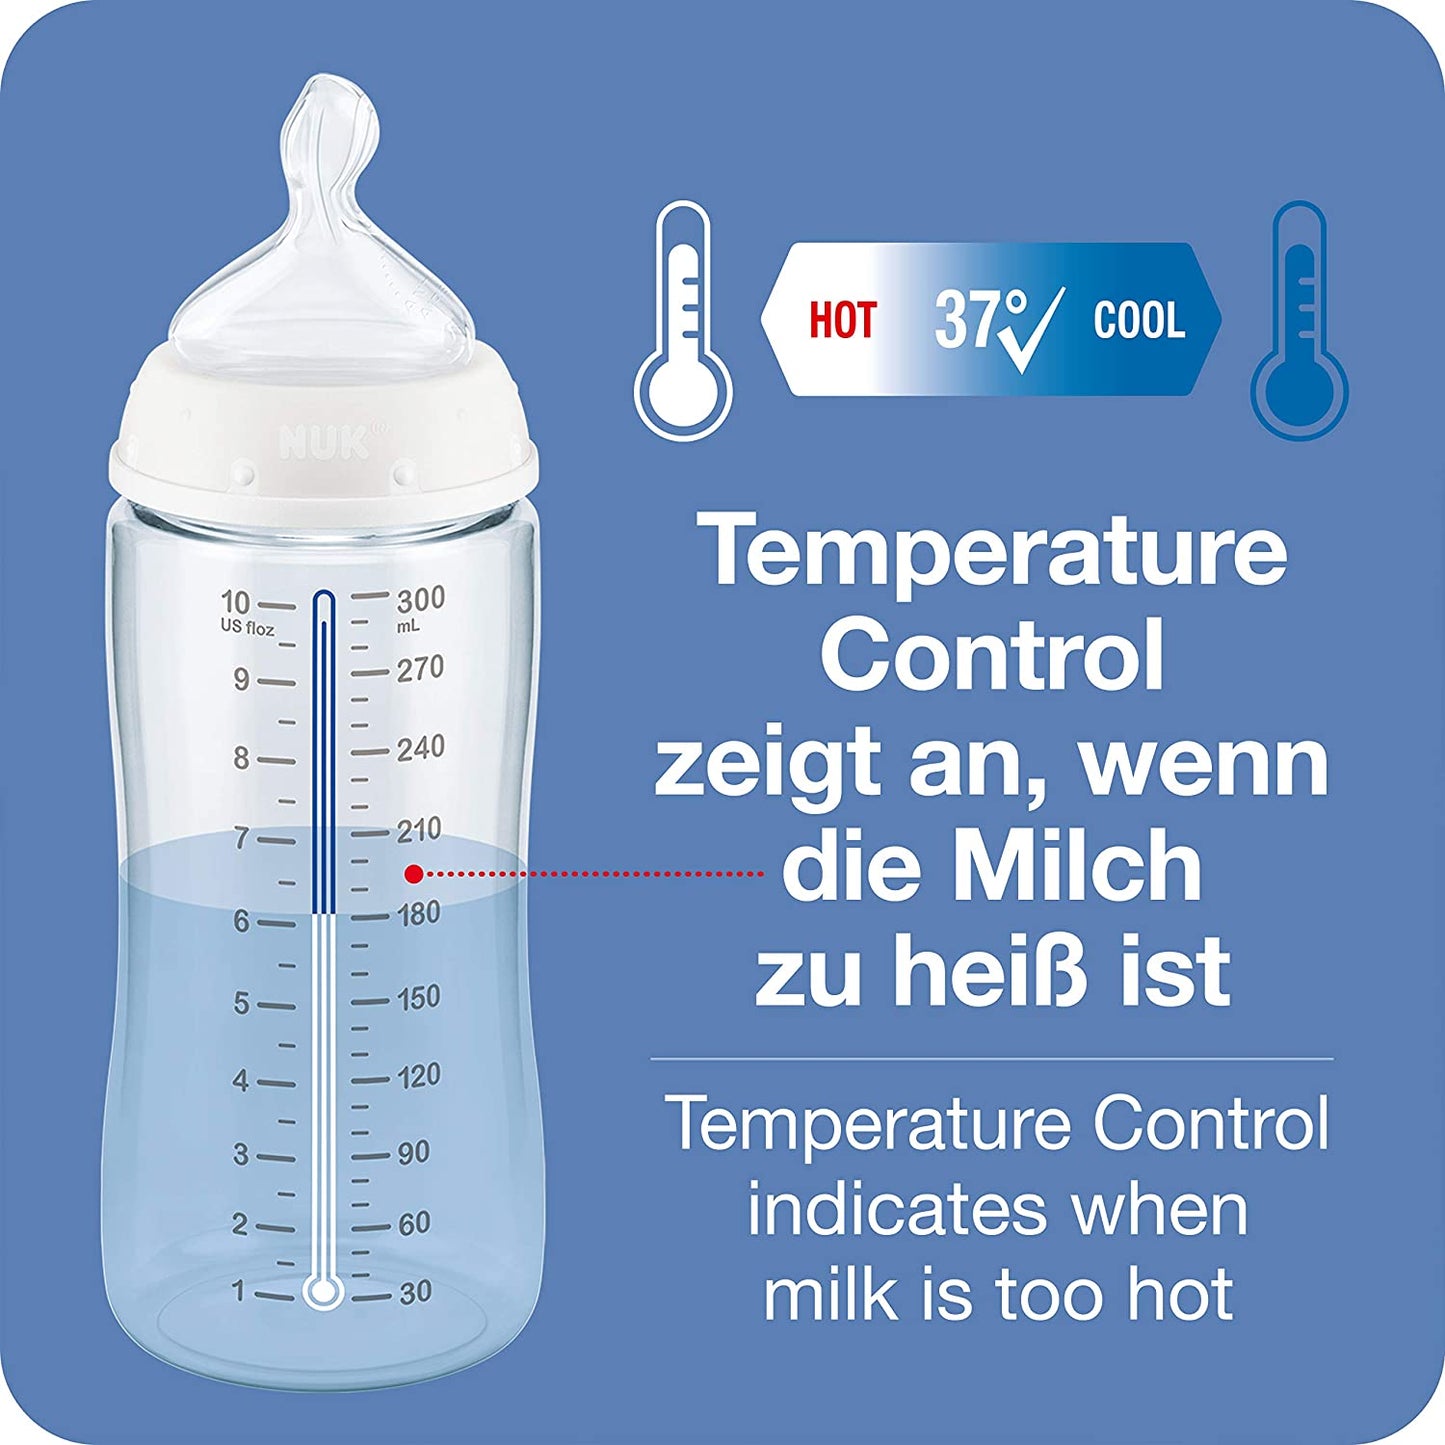 NUK Perfect Start First Choice+ Kit de Mamadeiras Com Controle de Temperatura - 10 itens AZUL